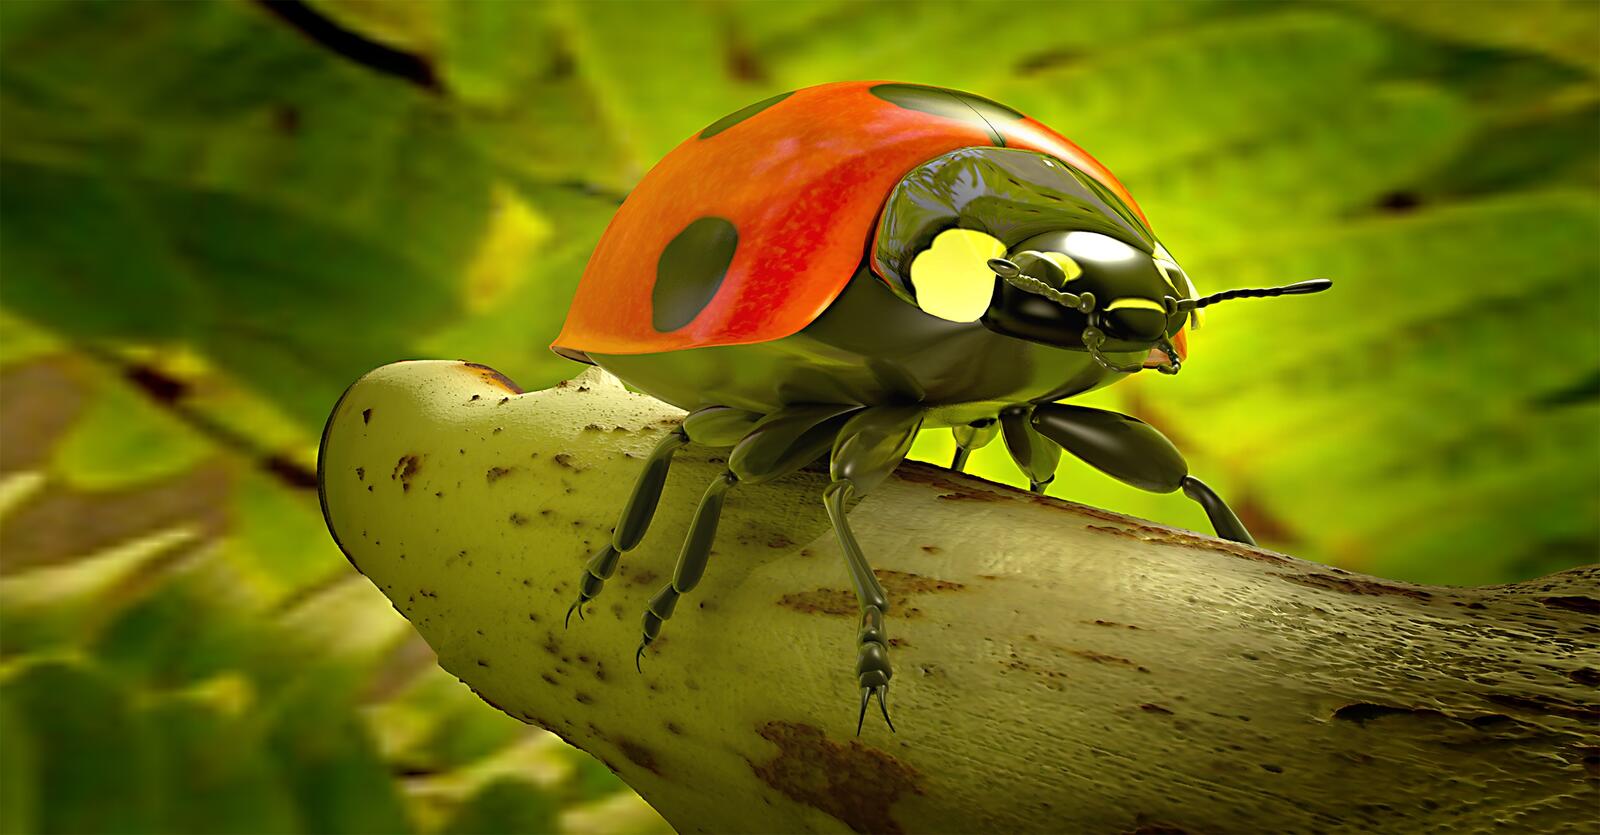 Free photo Ladybug closeup on a branch